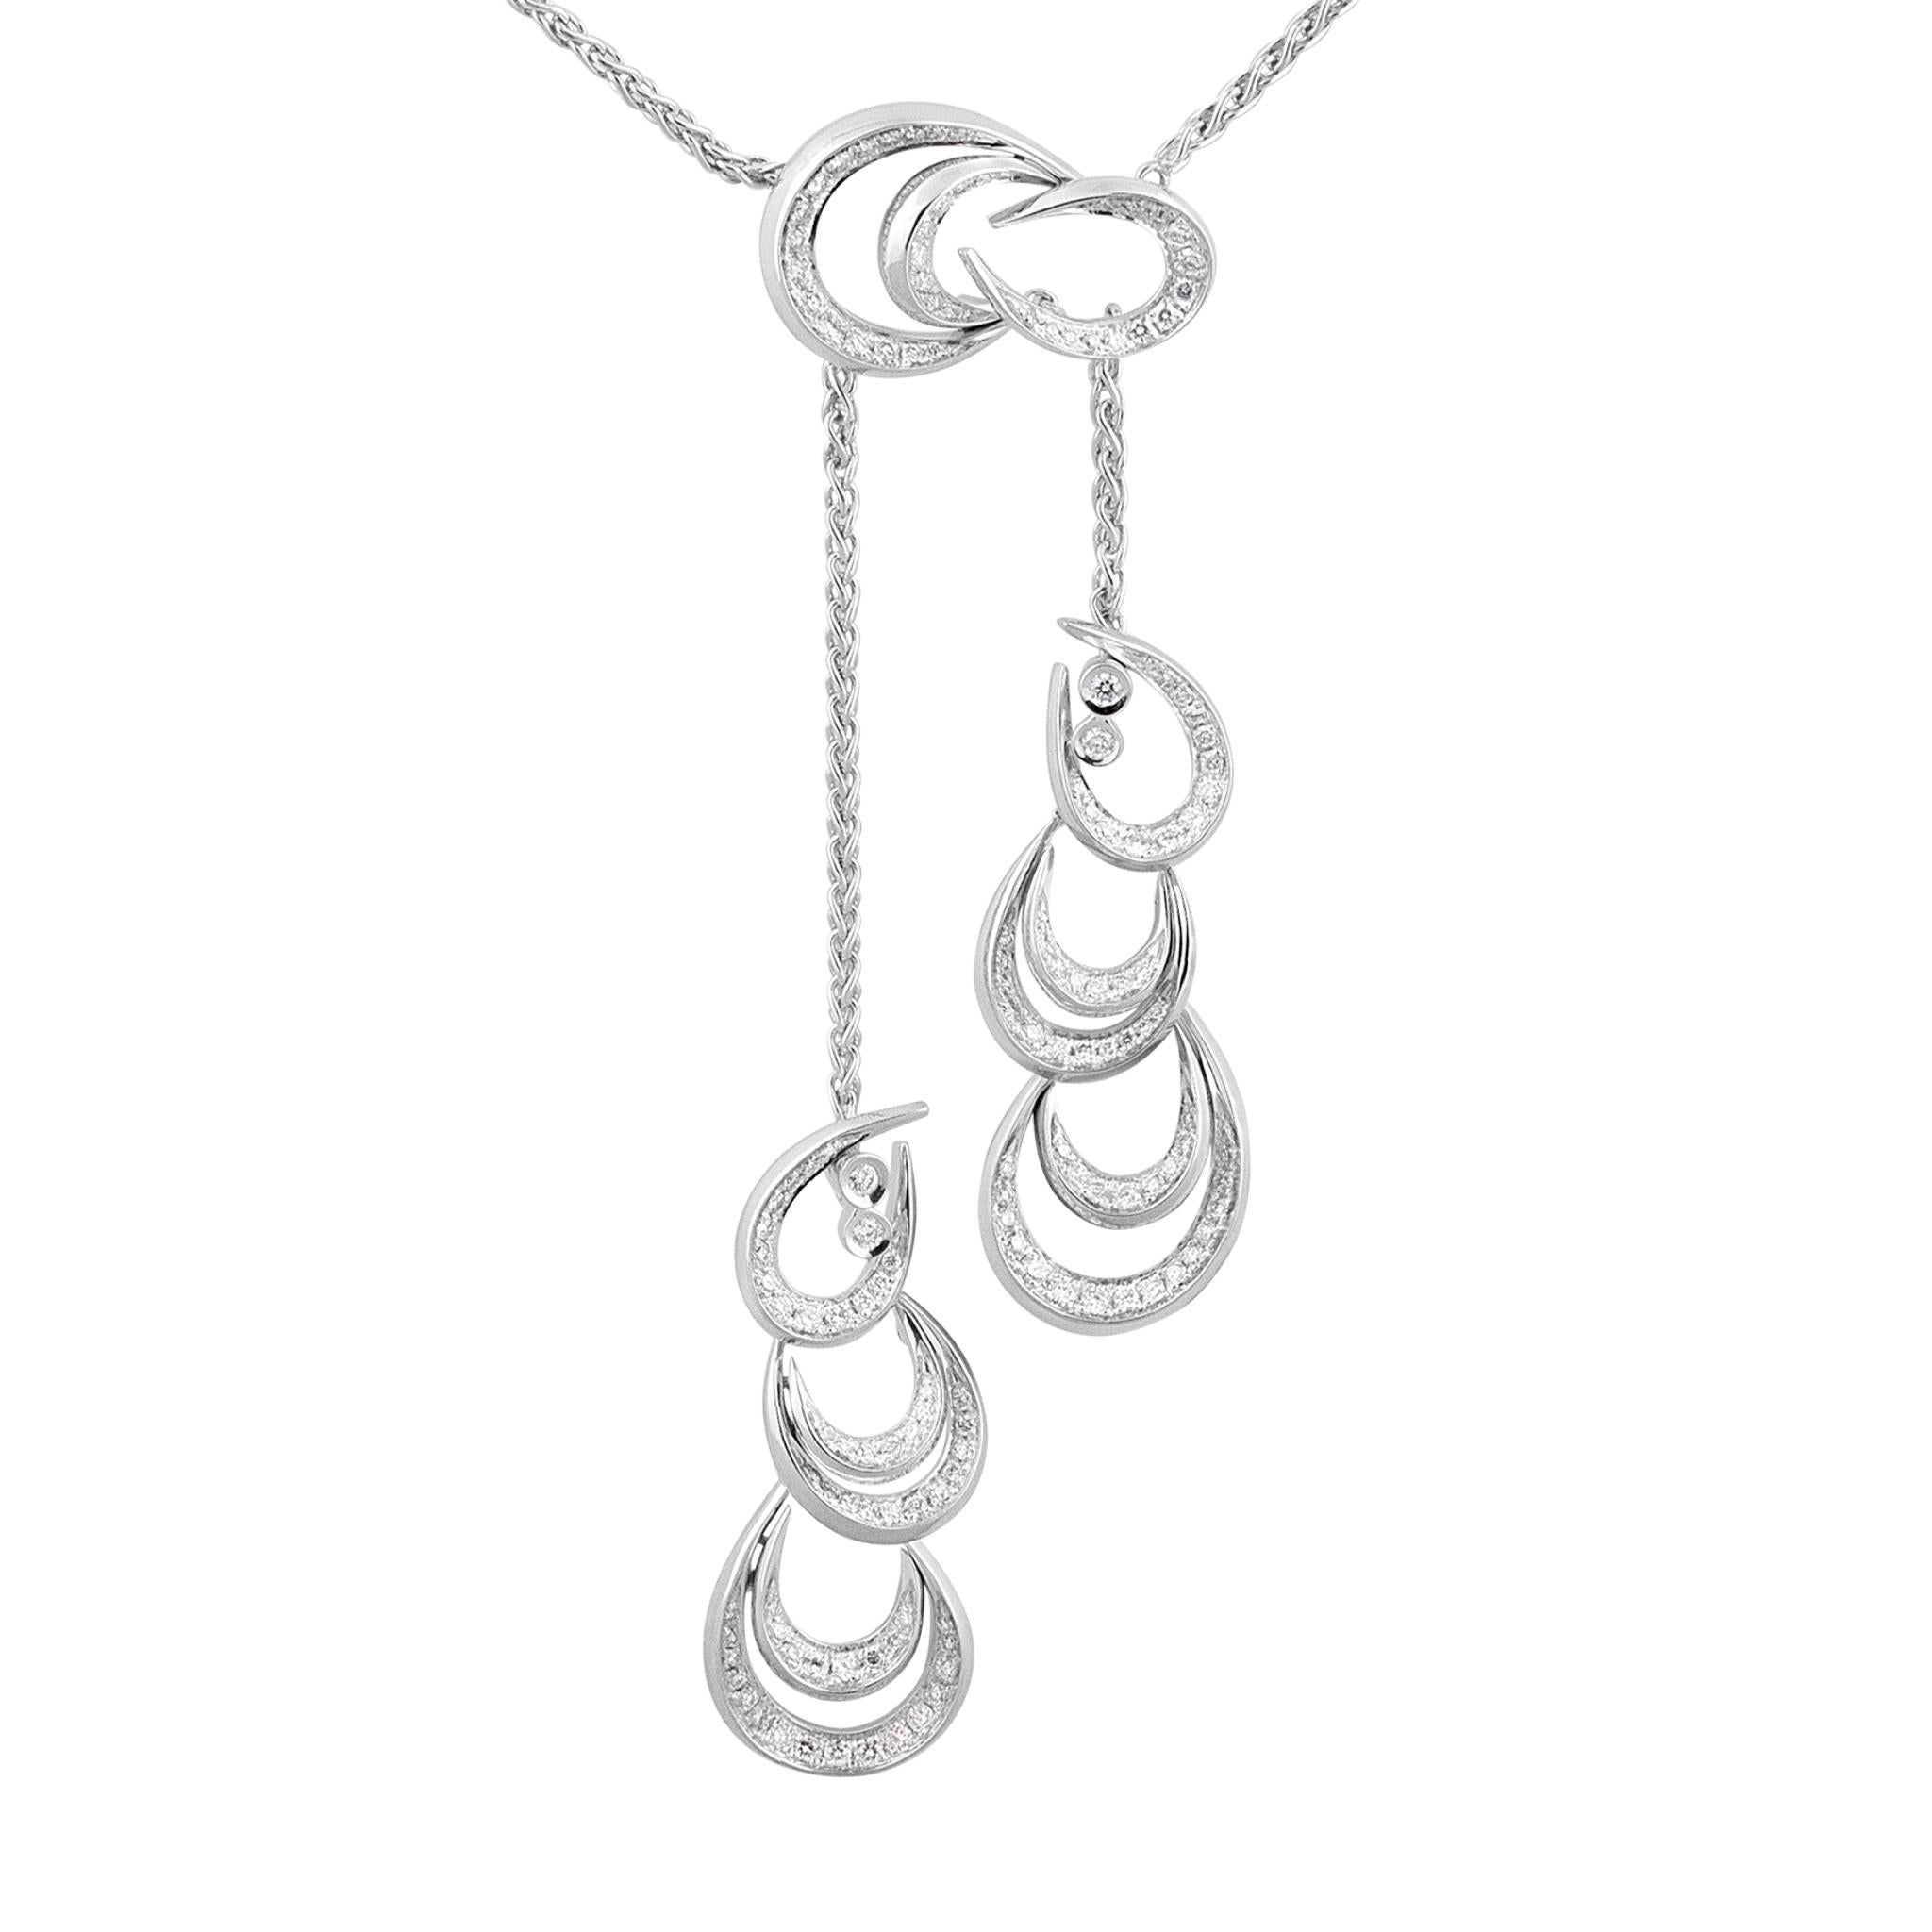 IO SI by Stefan Hafner Necklace
18K White Gold
Diamond: 2.09ctw
Retail price: $26,650.00
SKU: BLU02040